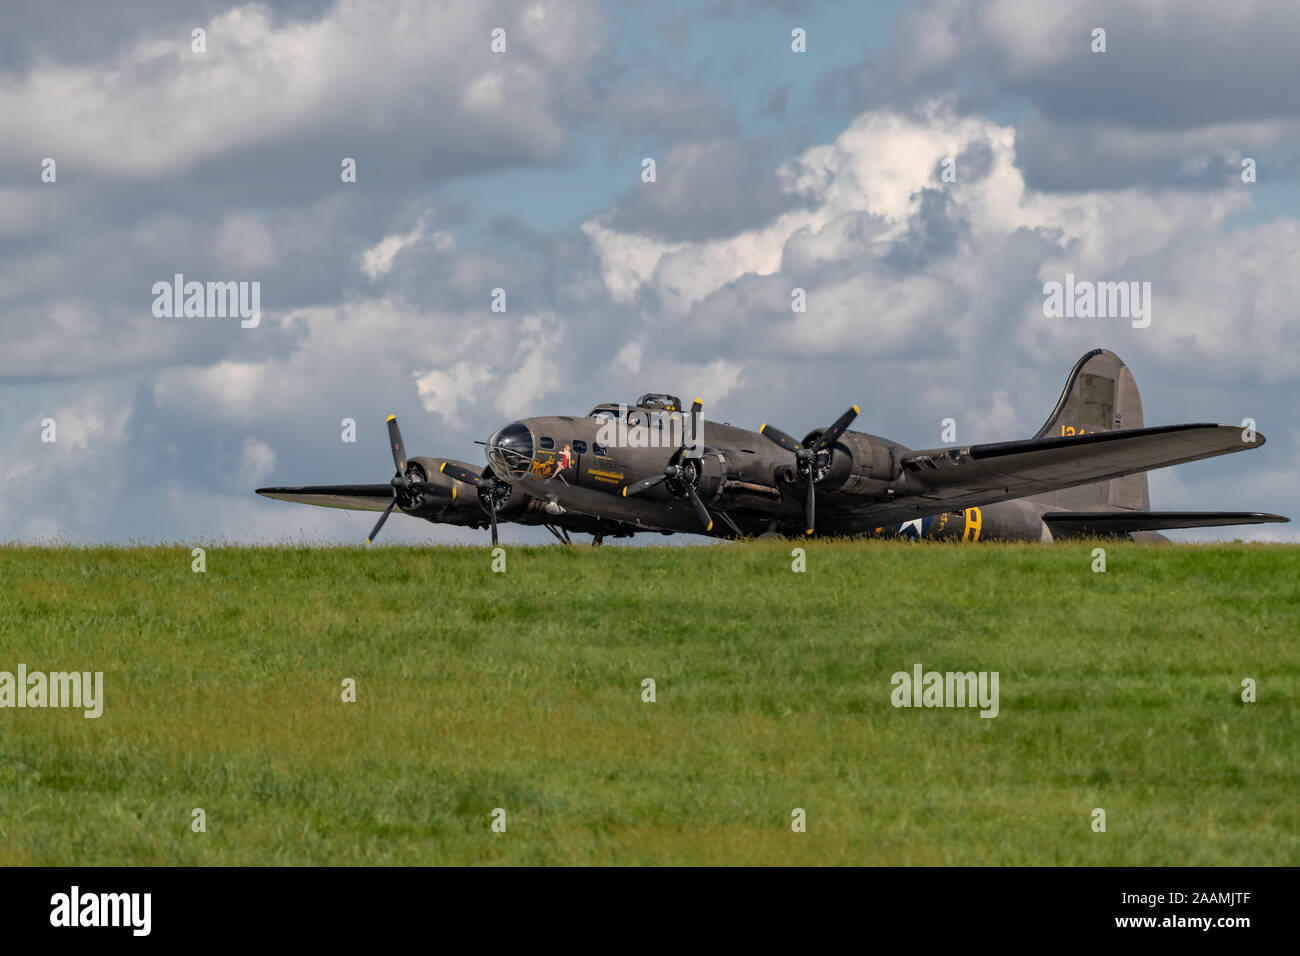 NEW WINDSOR NY - SEPTEMBER 15 2018: World War II era Boeing B-17 Flying Fortress bomber aircraft the Memphis Belle Stock Photo